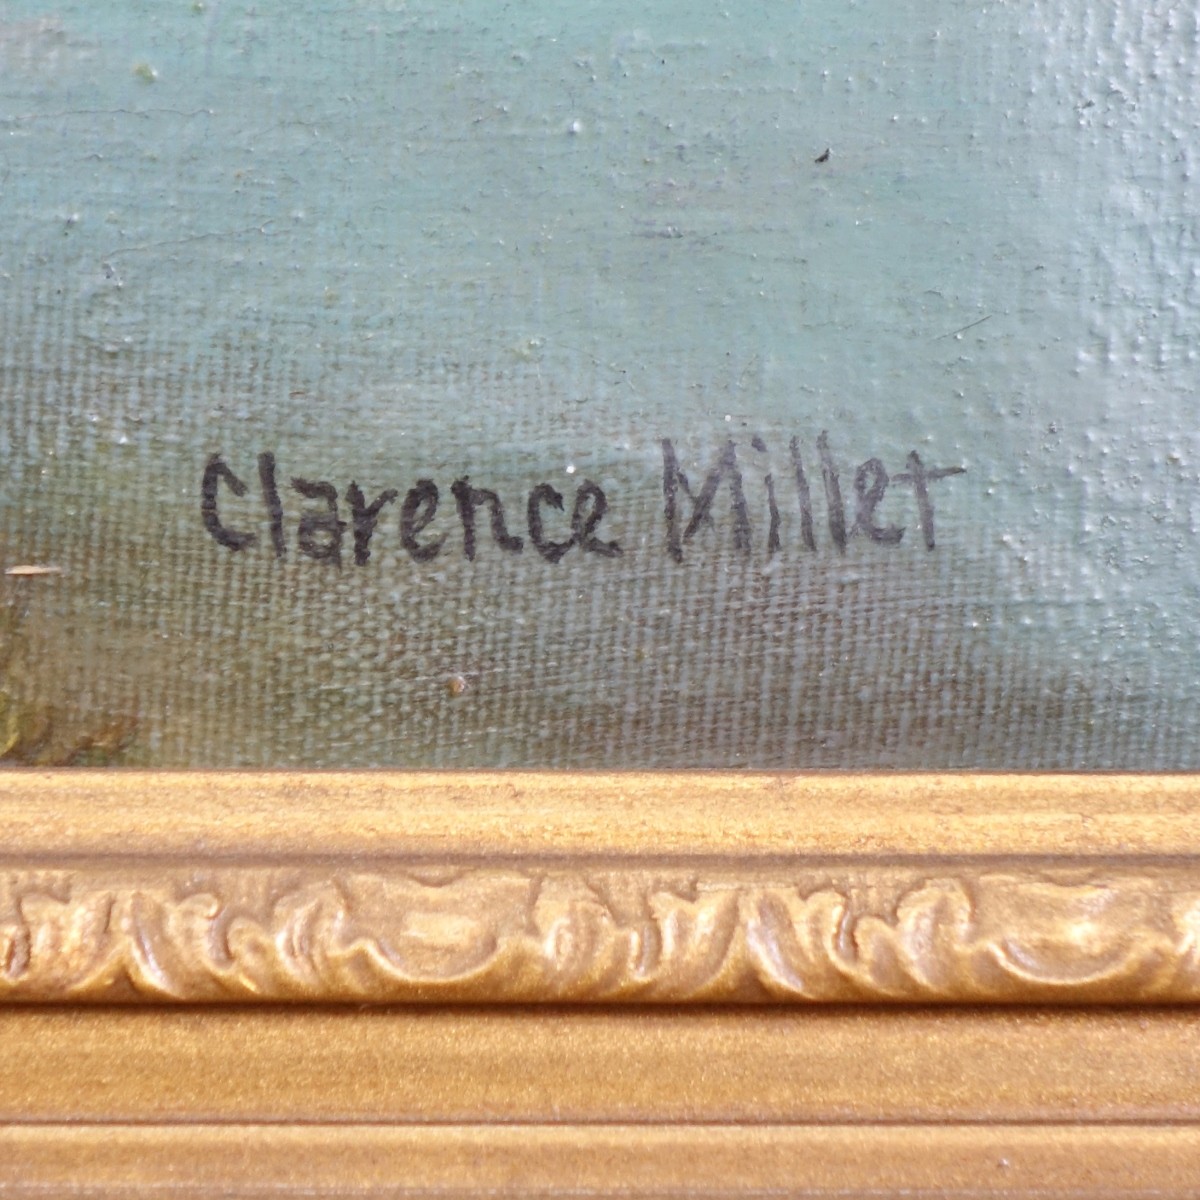 Attrib: Clarence Millet (1897-1959)